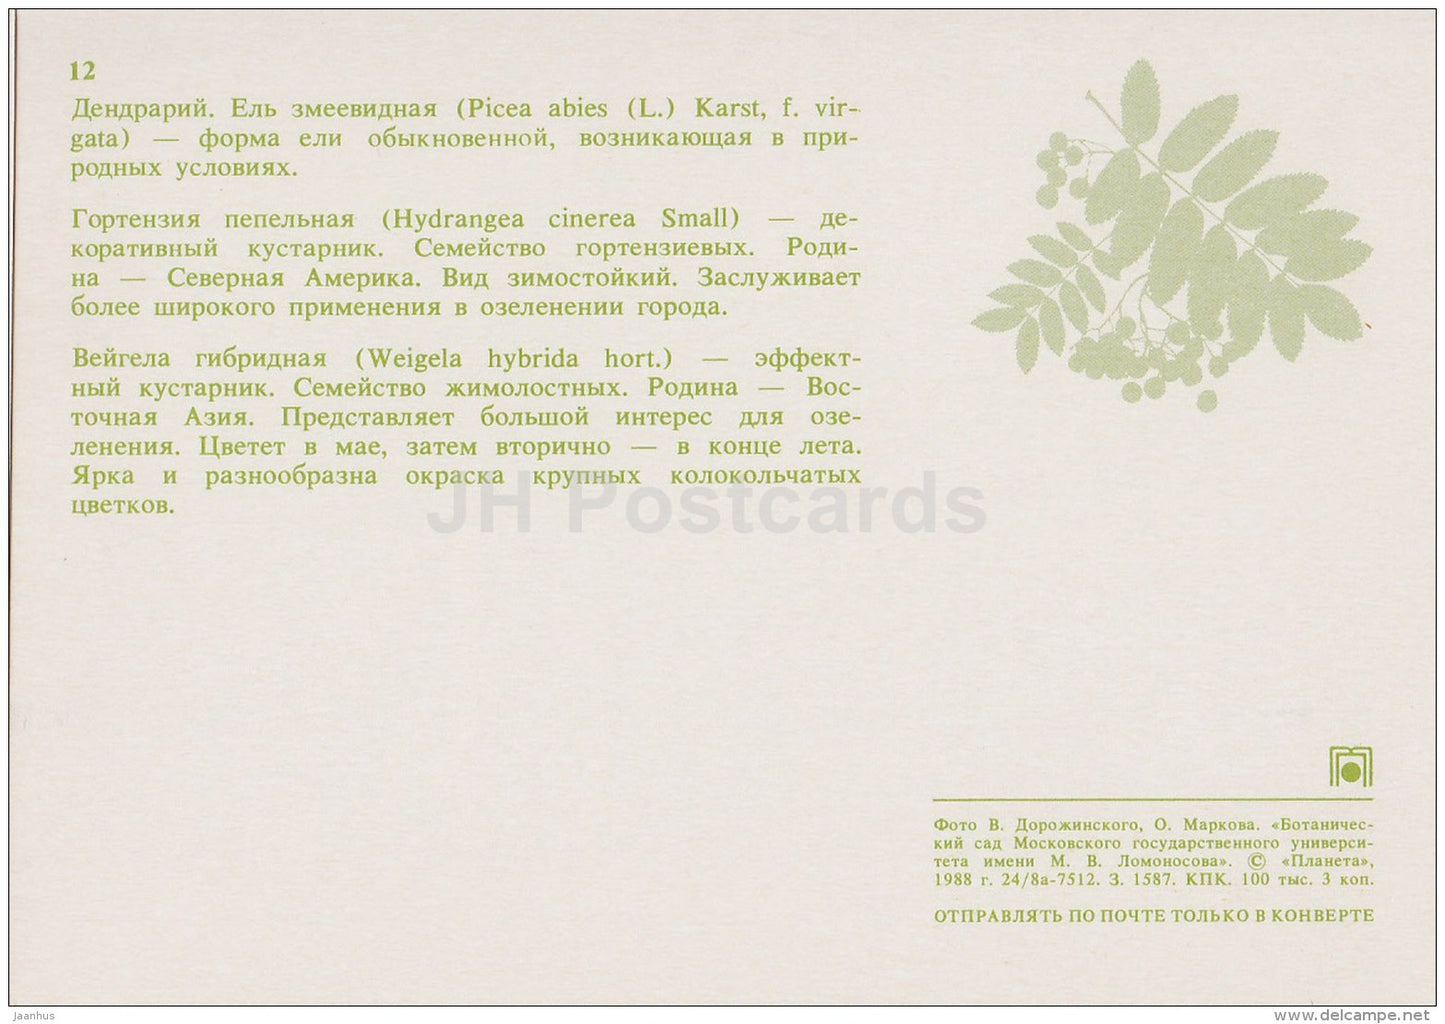 Norway spruce , Picea abies - Hydrangea cinerea - Weigela hybrida  Moscow Botanical Garden - 1988 - Russia USSR - unused - JH Postcards